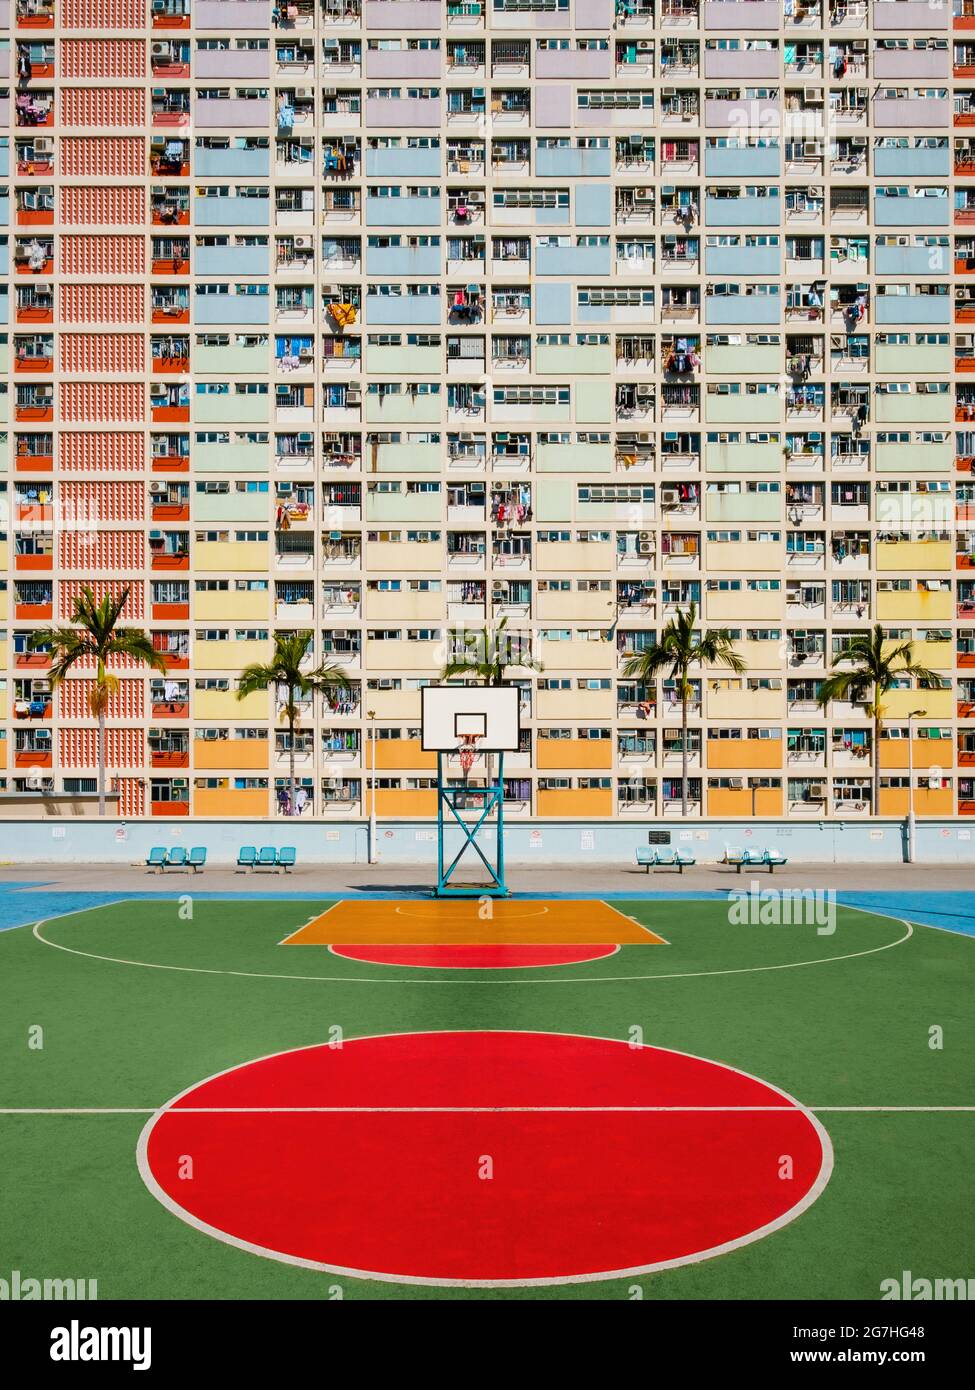 Colorida cancha de baloncesto y fachada de edificio de color arco iris en Hong  Kong Fotografía de stock - Alamy